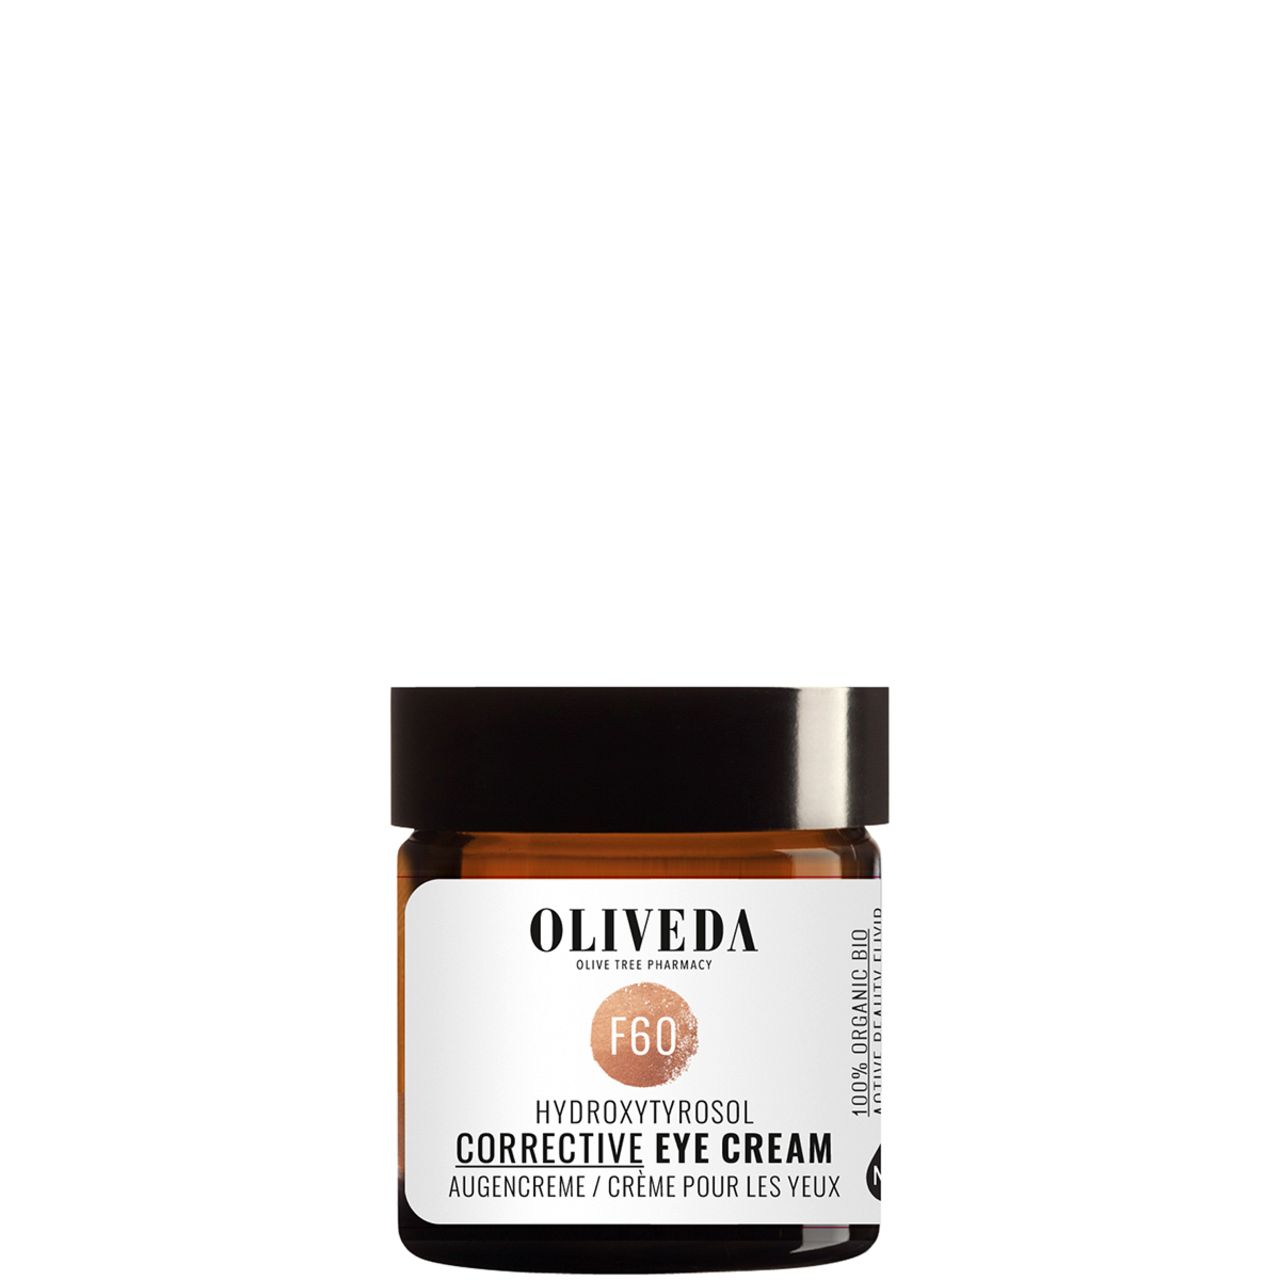 Oliveda, Augencreme Hydroxytyrosol Corrective